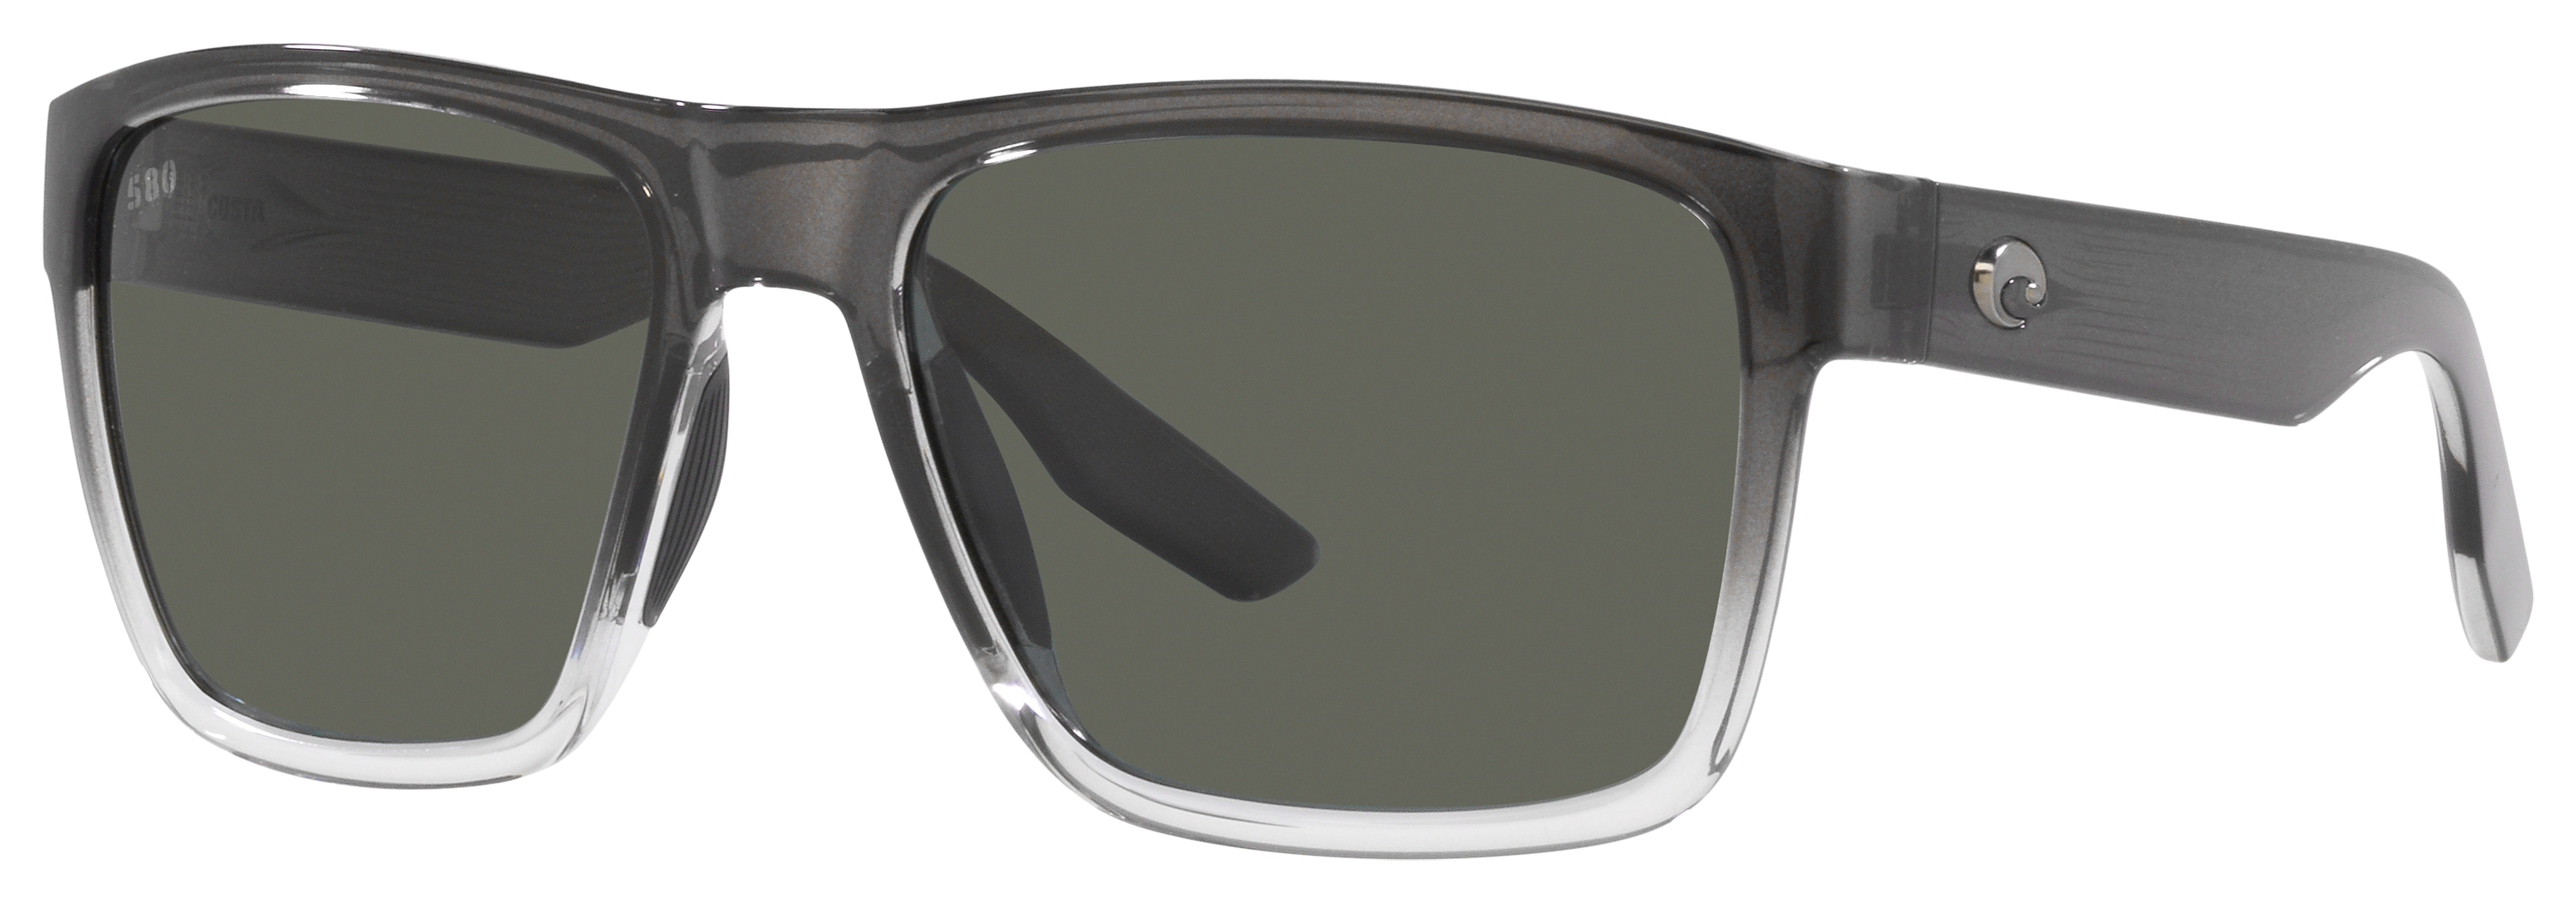 Costa Del Mar Paunch XL 580G Glass Polarized Sunglasses - Fog Gray/Gray - Medium